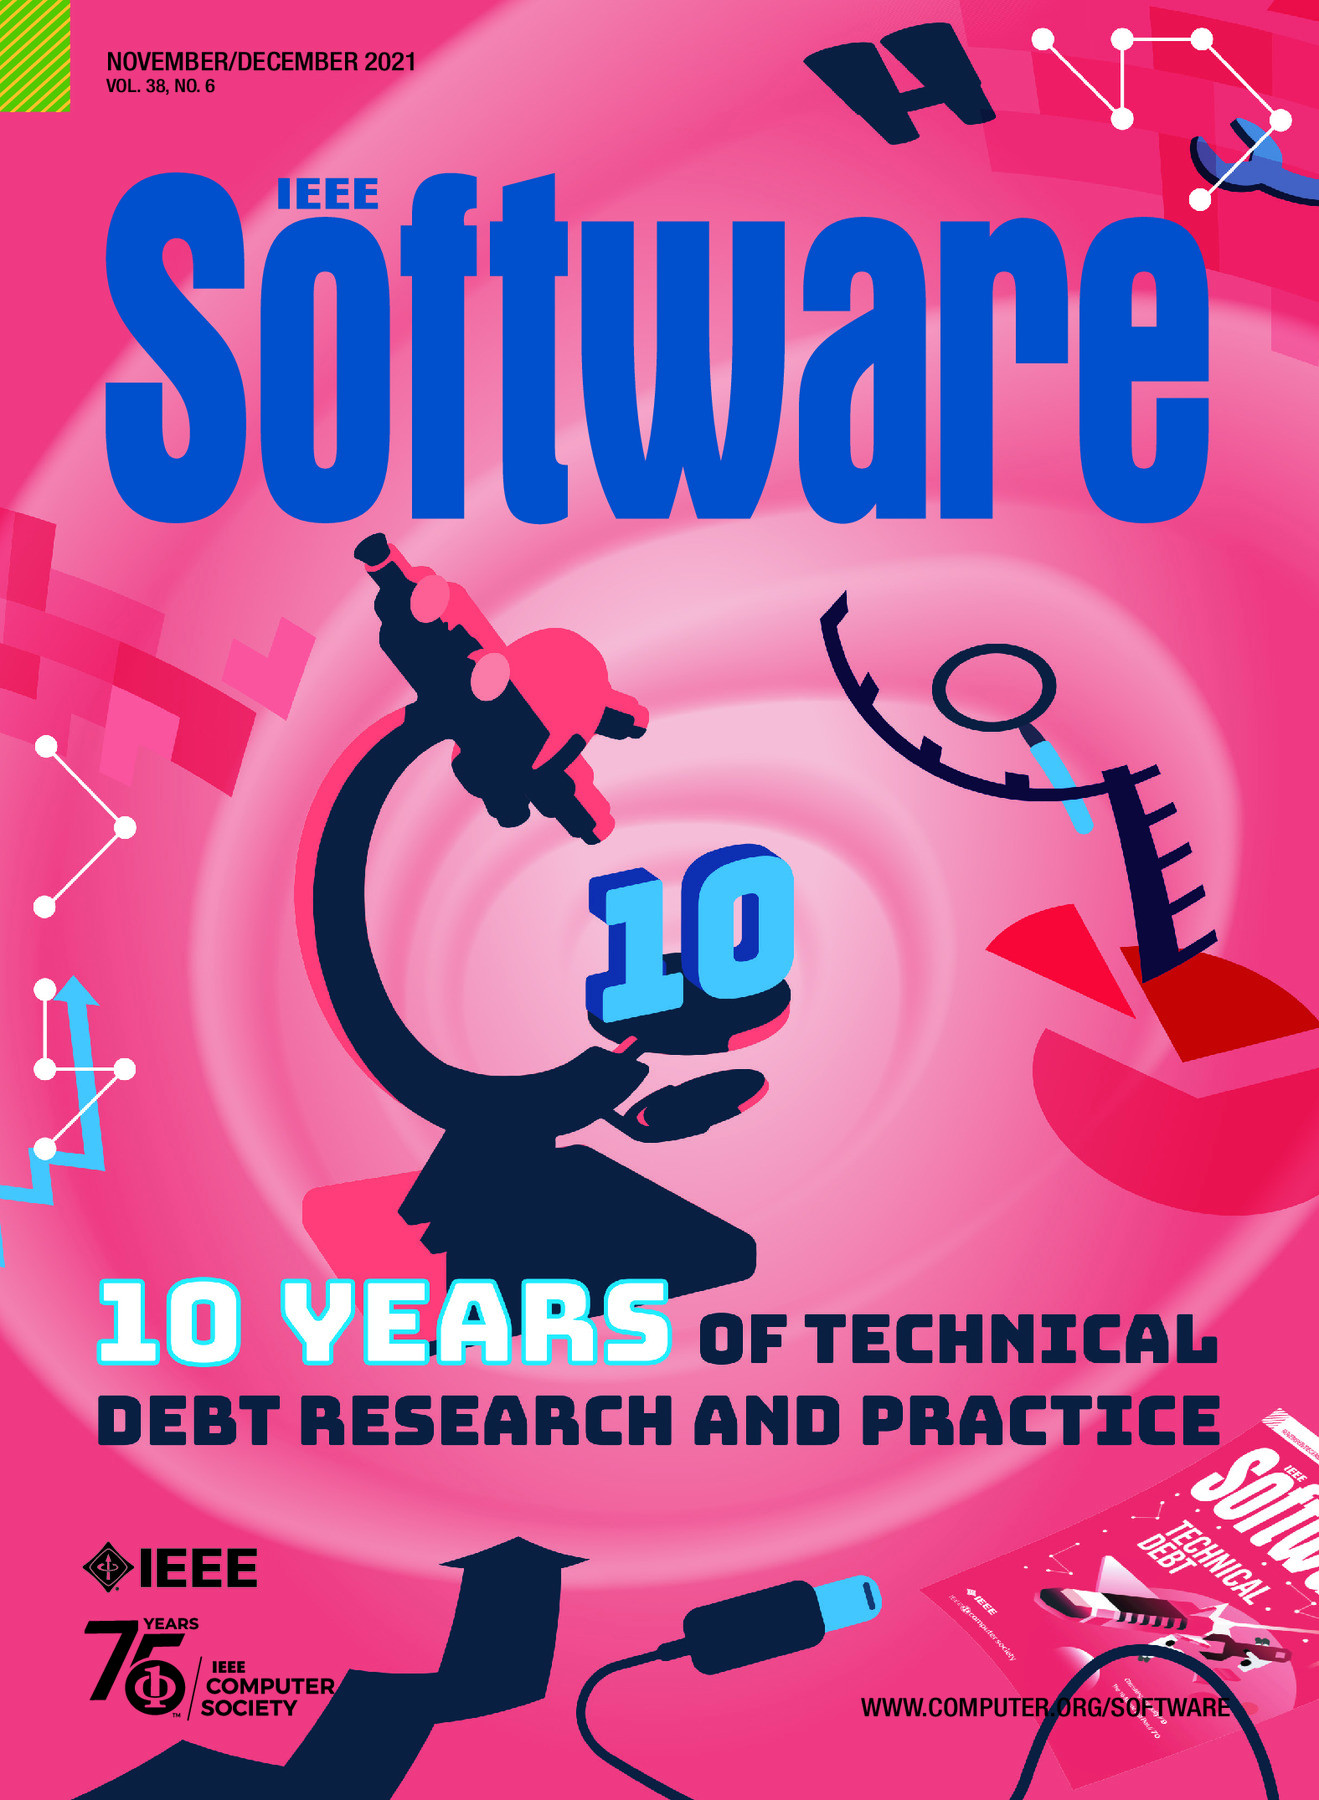 IEEE Software November/December 2021 Vol. 38 No. 6